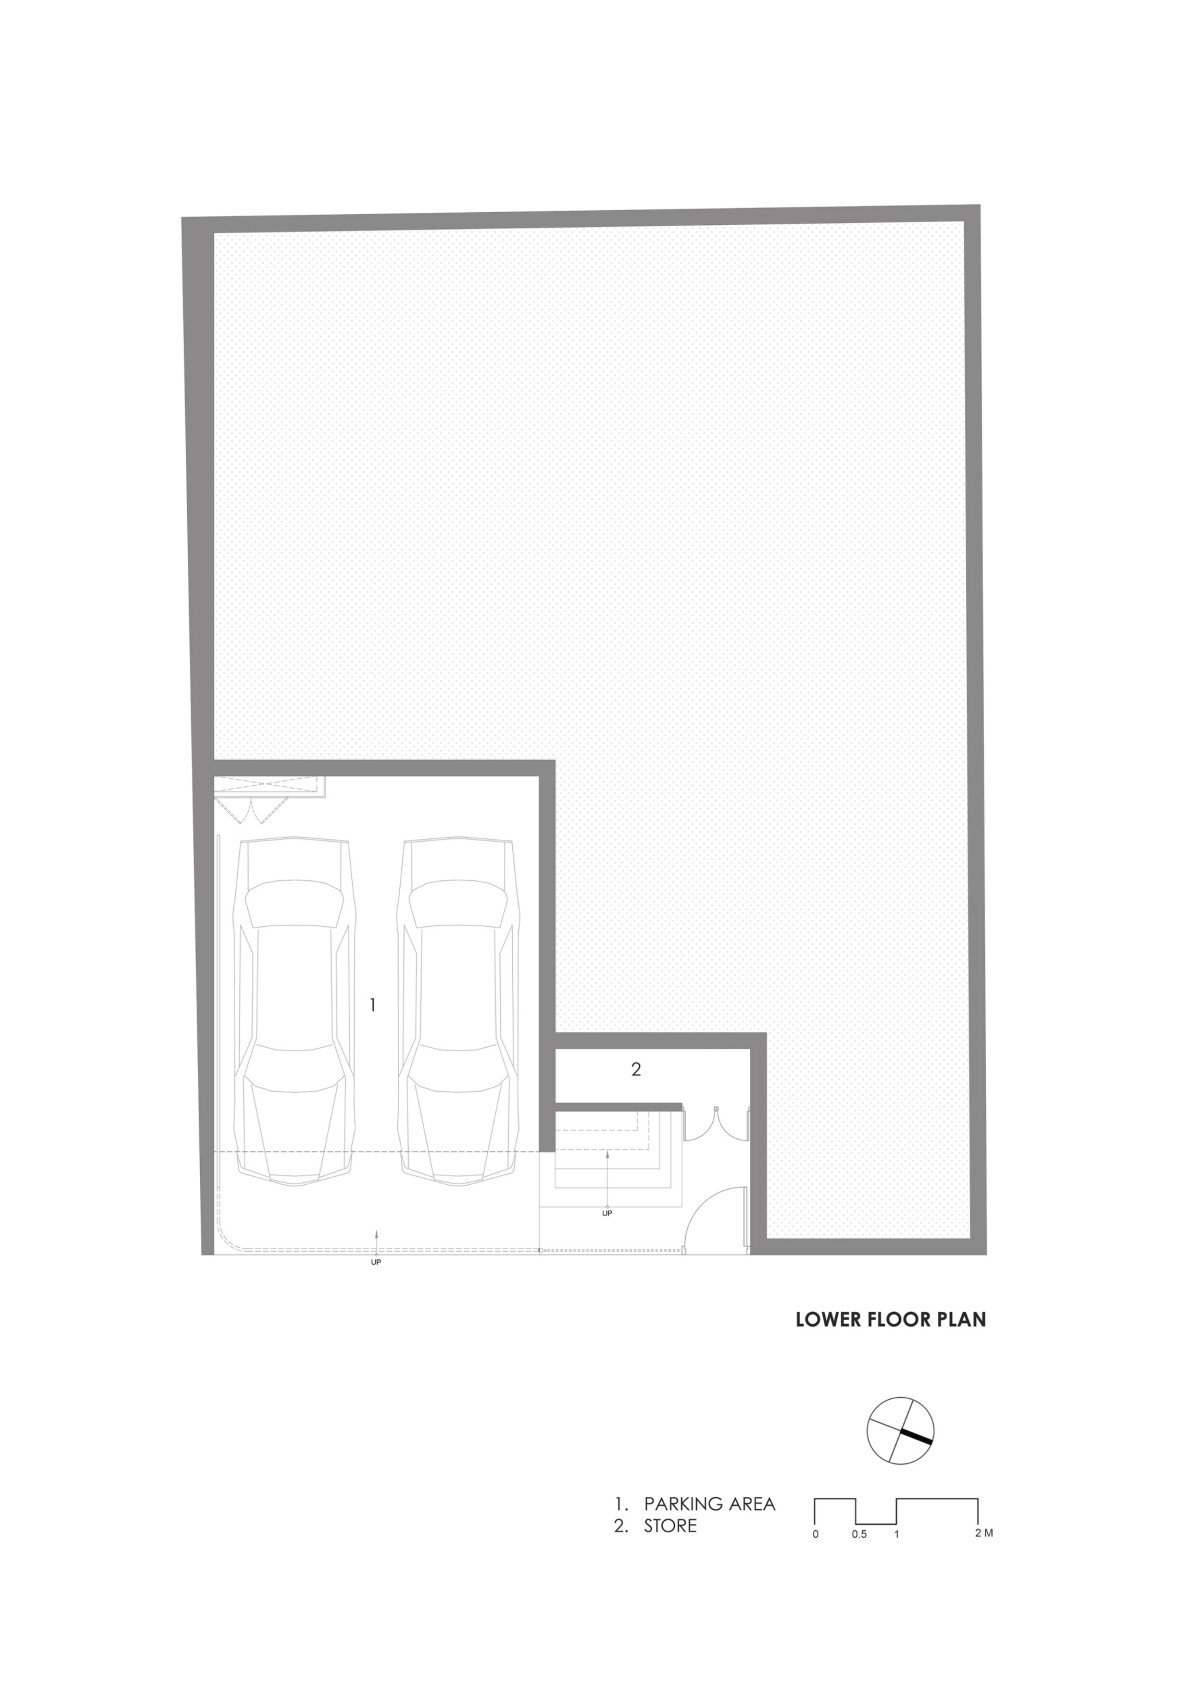 Lower floor plan of The White Bleached House by Neogenesis+Studi0261